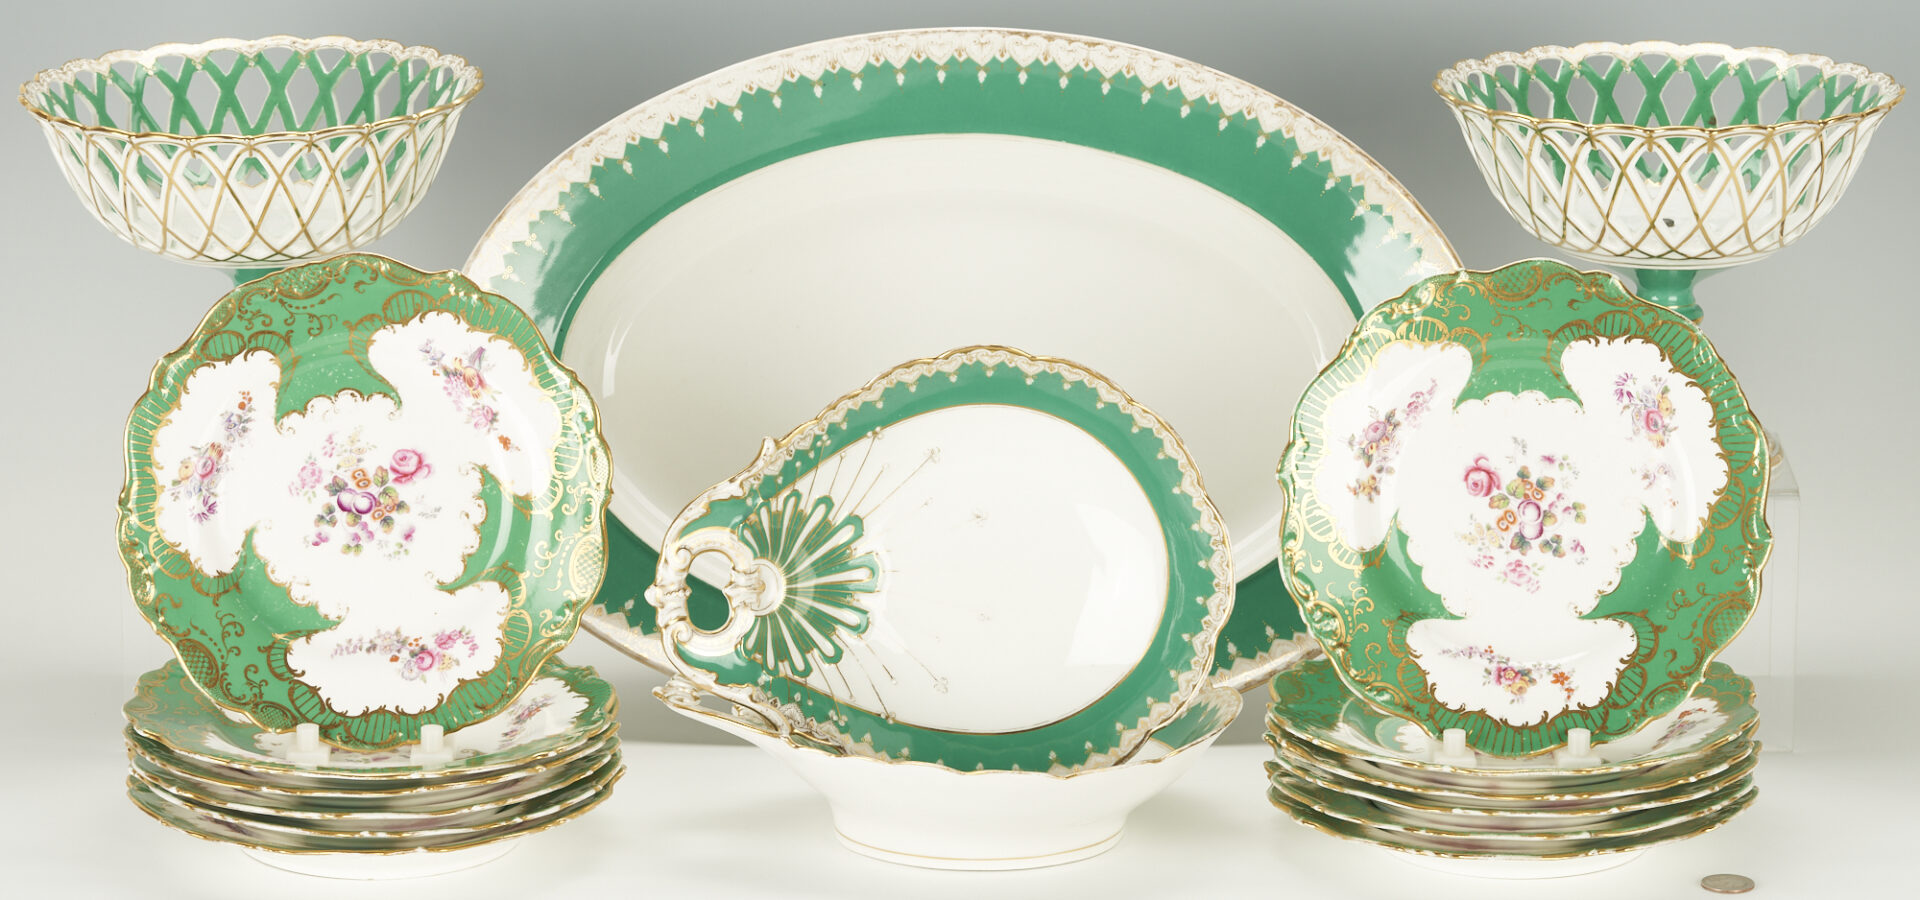 Lot 846: 16 European Porcelain Items w/ Green Borders